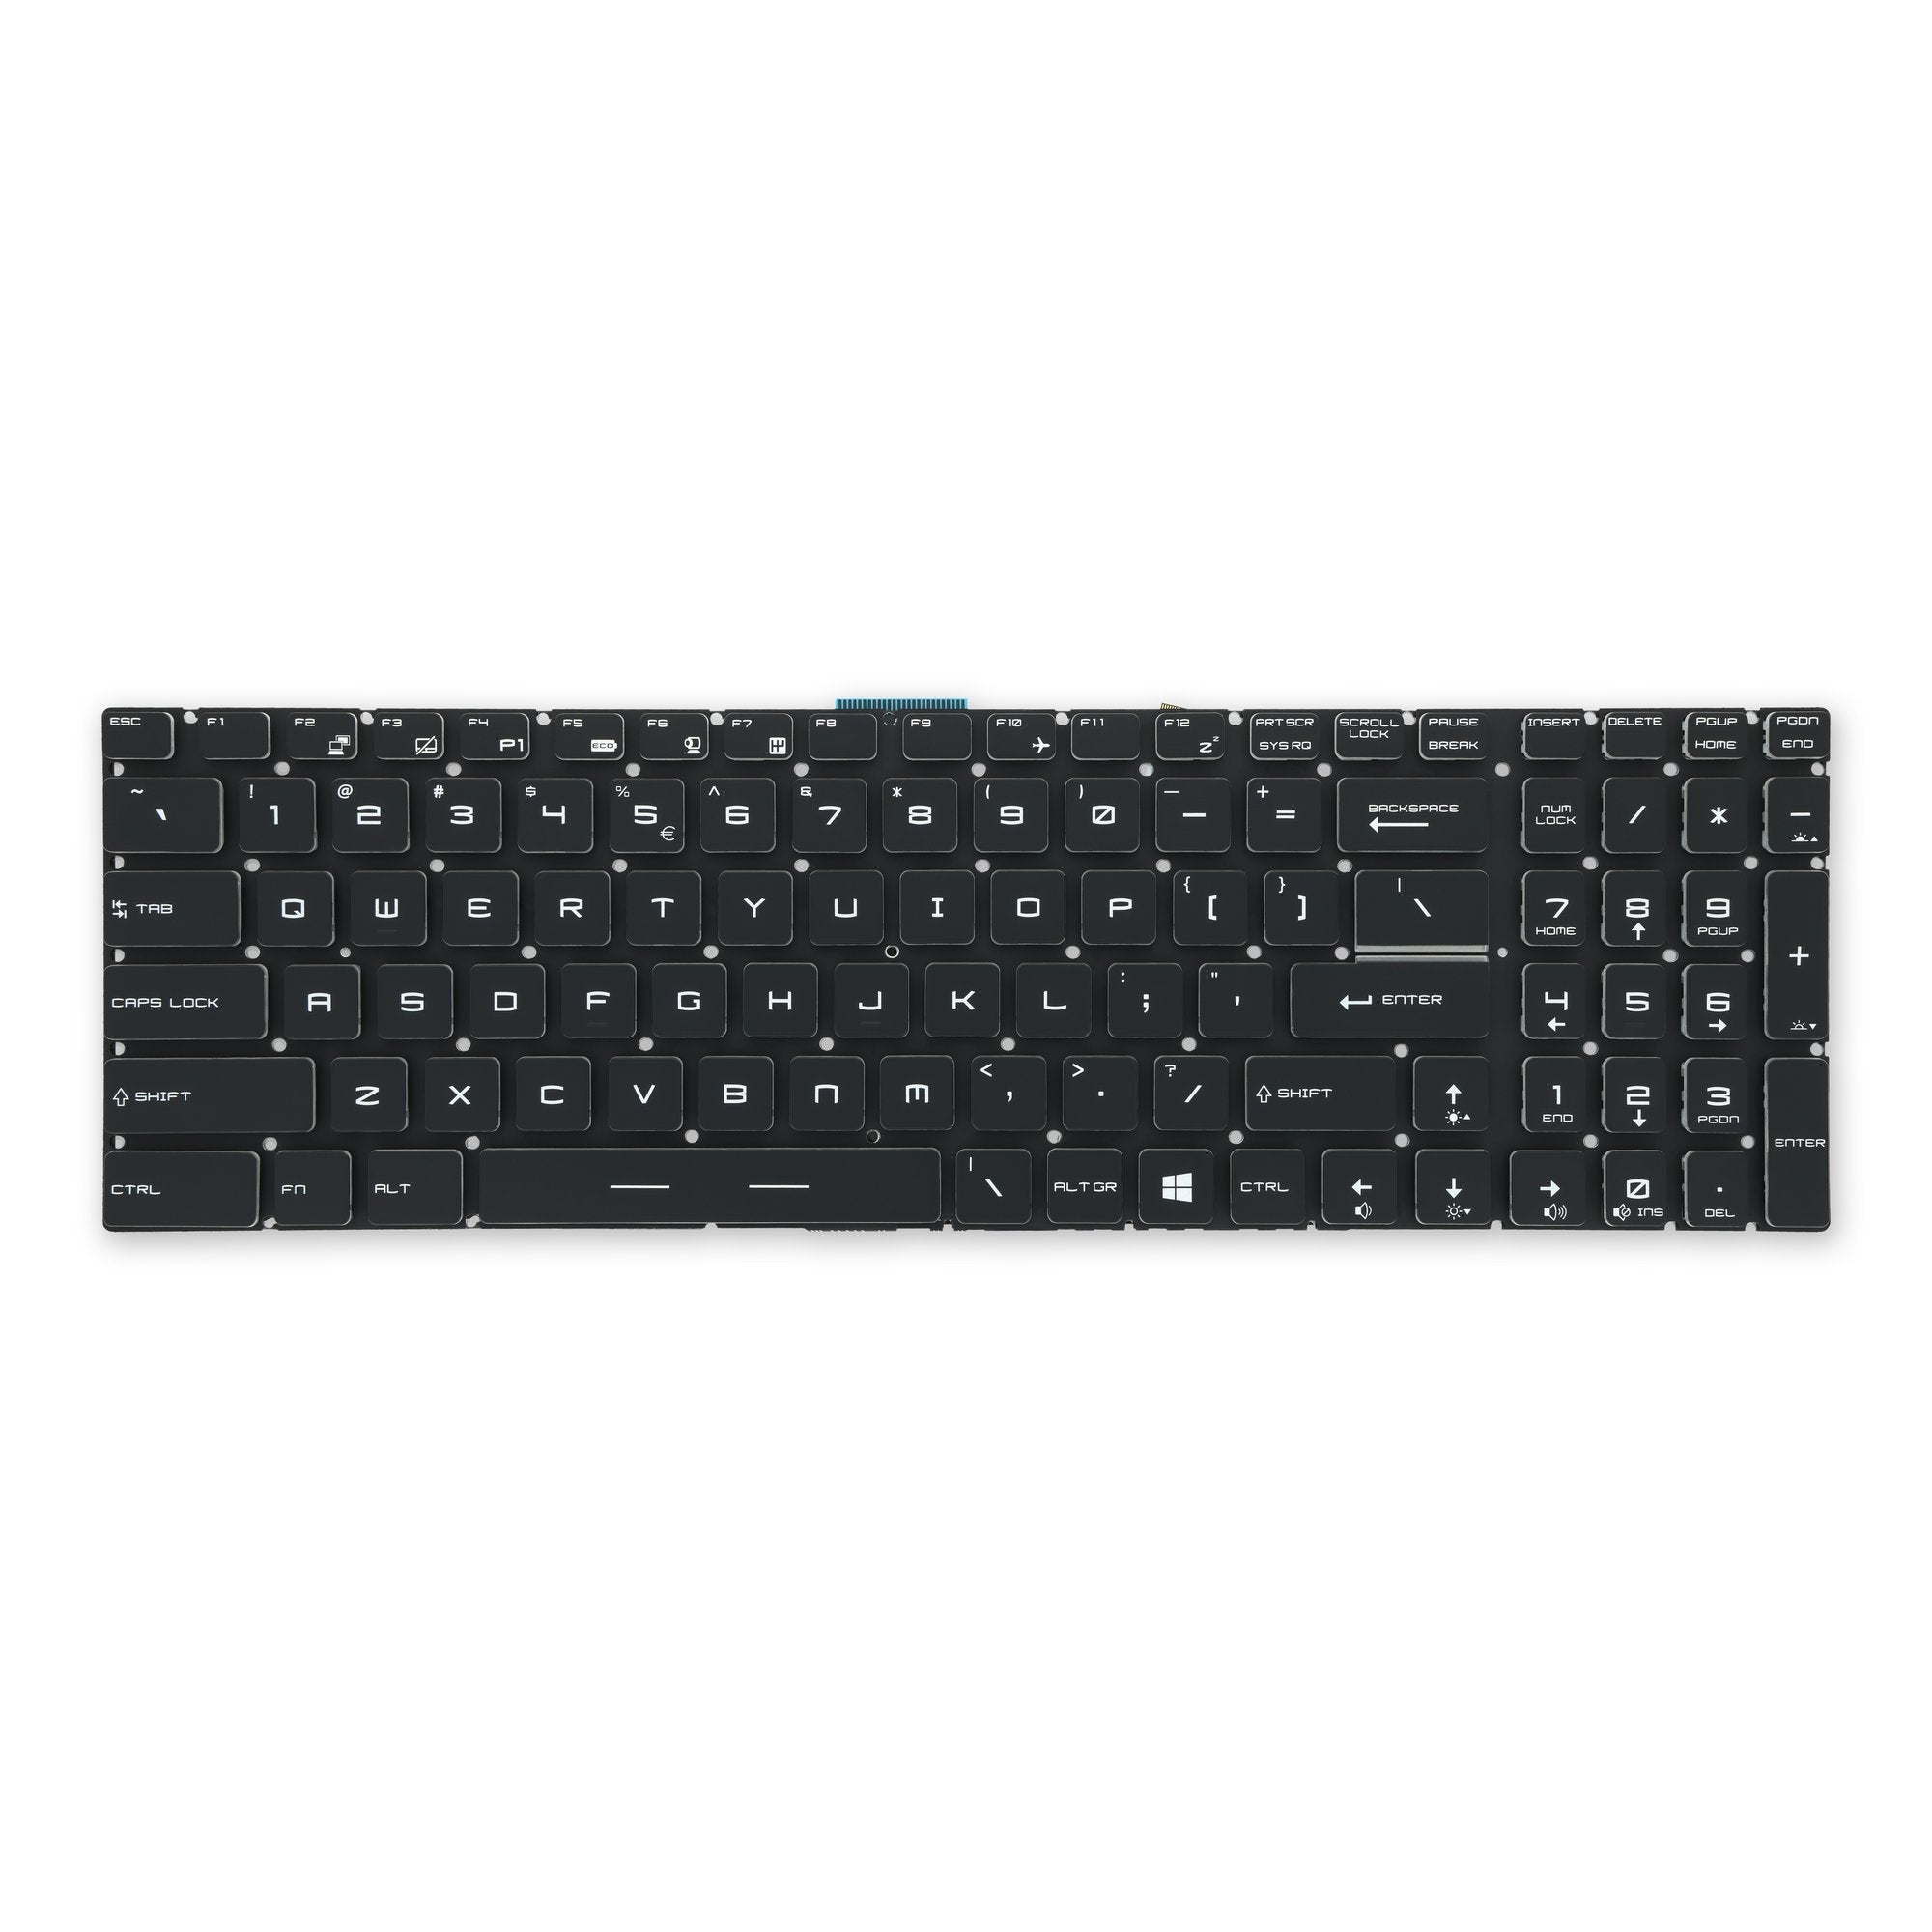 MSI Keyboard - V143422BK2 New US Keyboard Layout